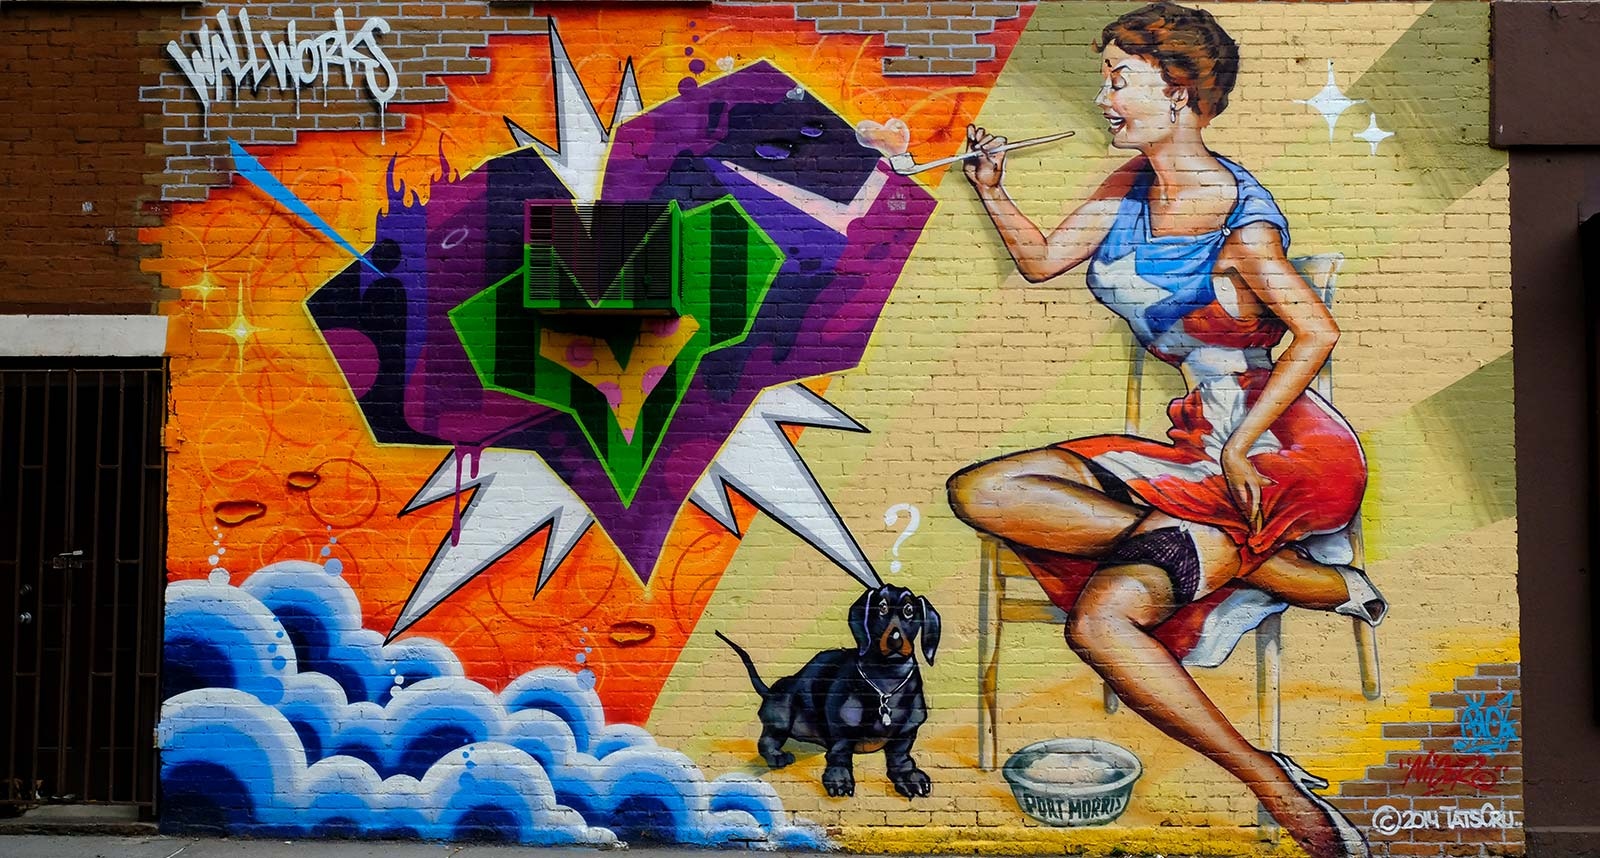 Graffiti Art - Port Morris - NY